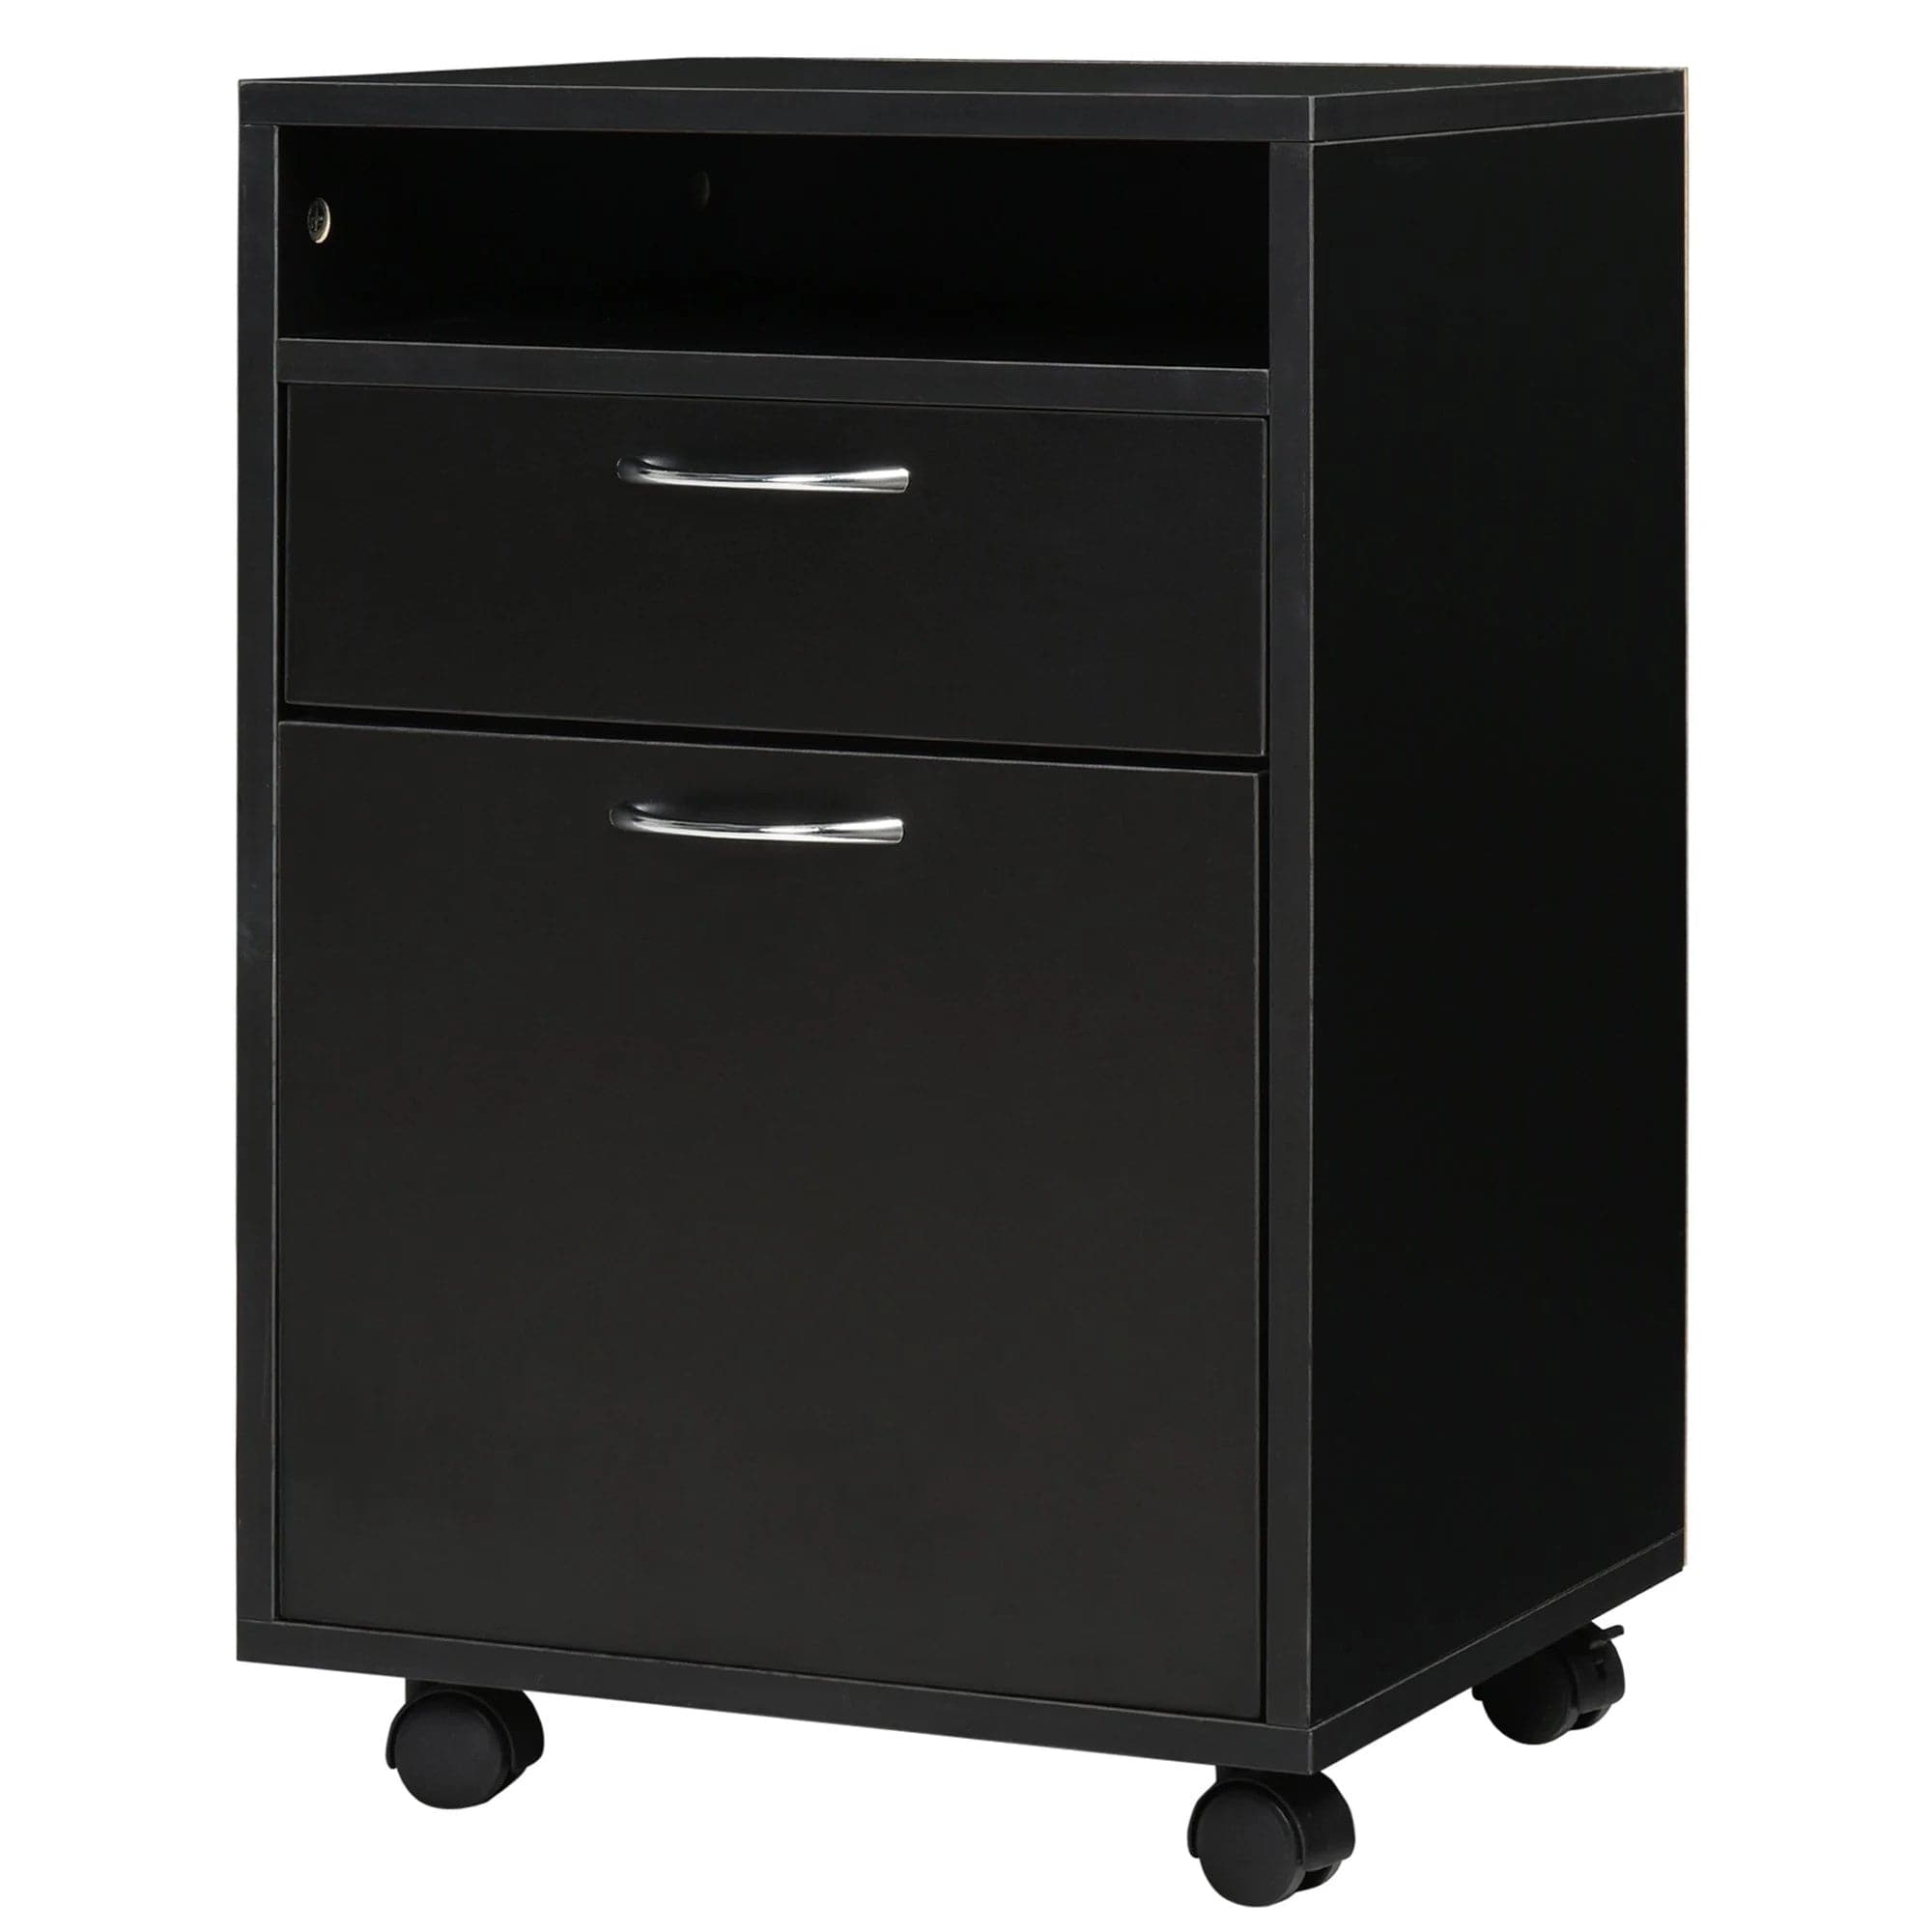 ProperAV 60cm 2-Drawer Office Home Storage Cabinet (Black)